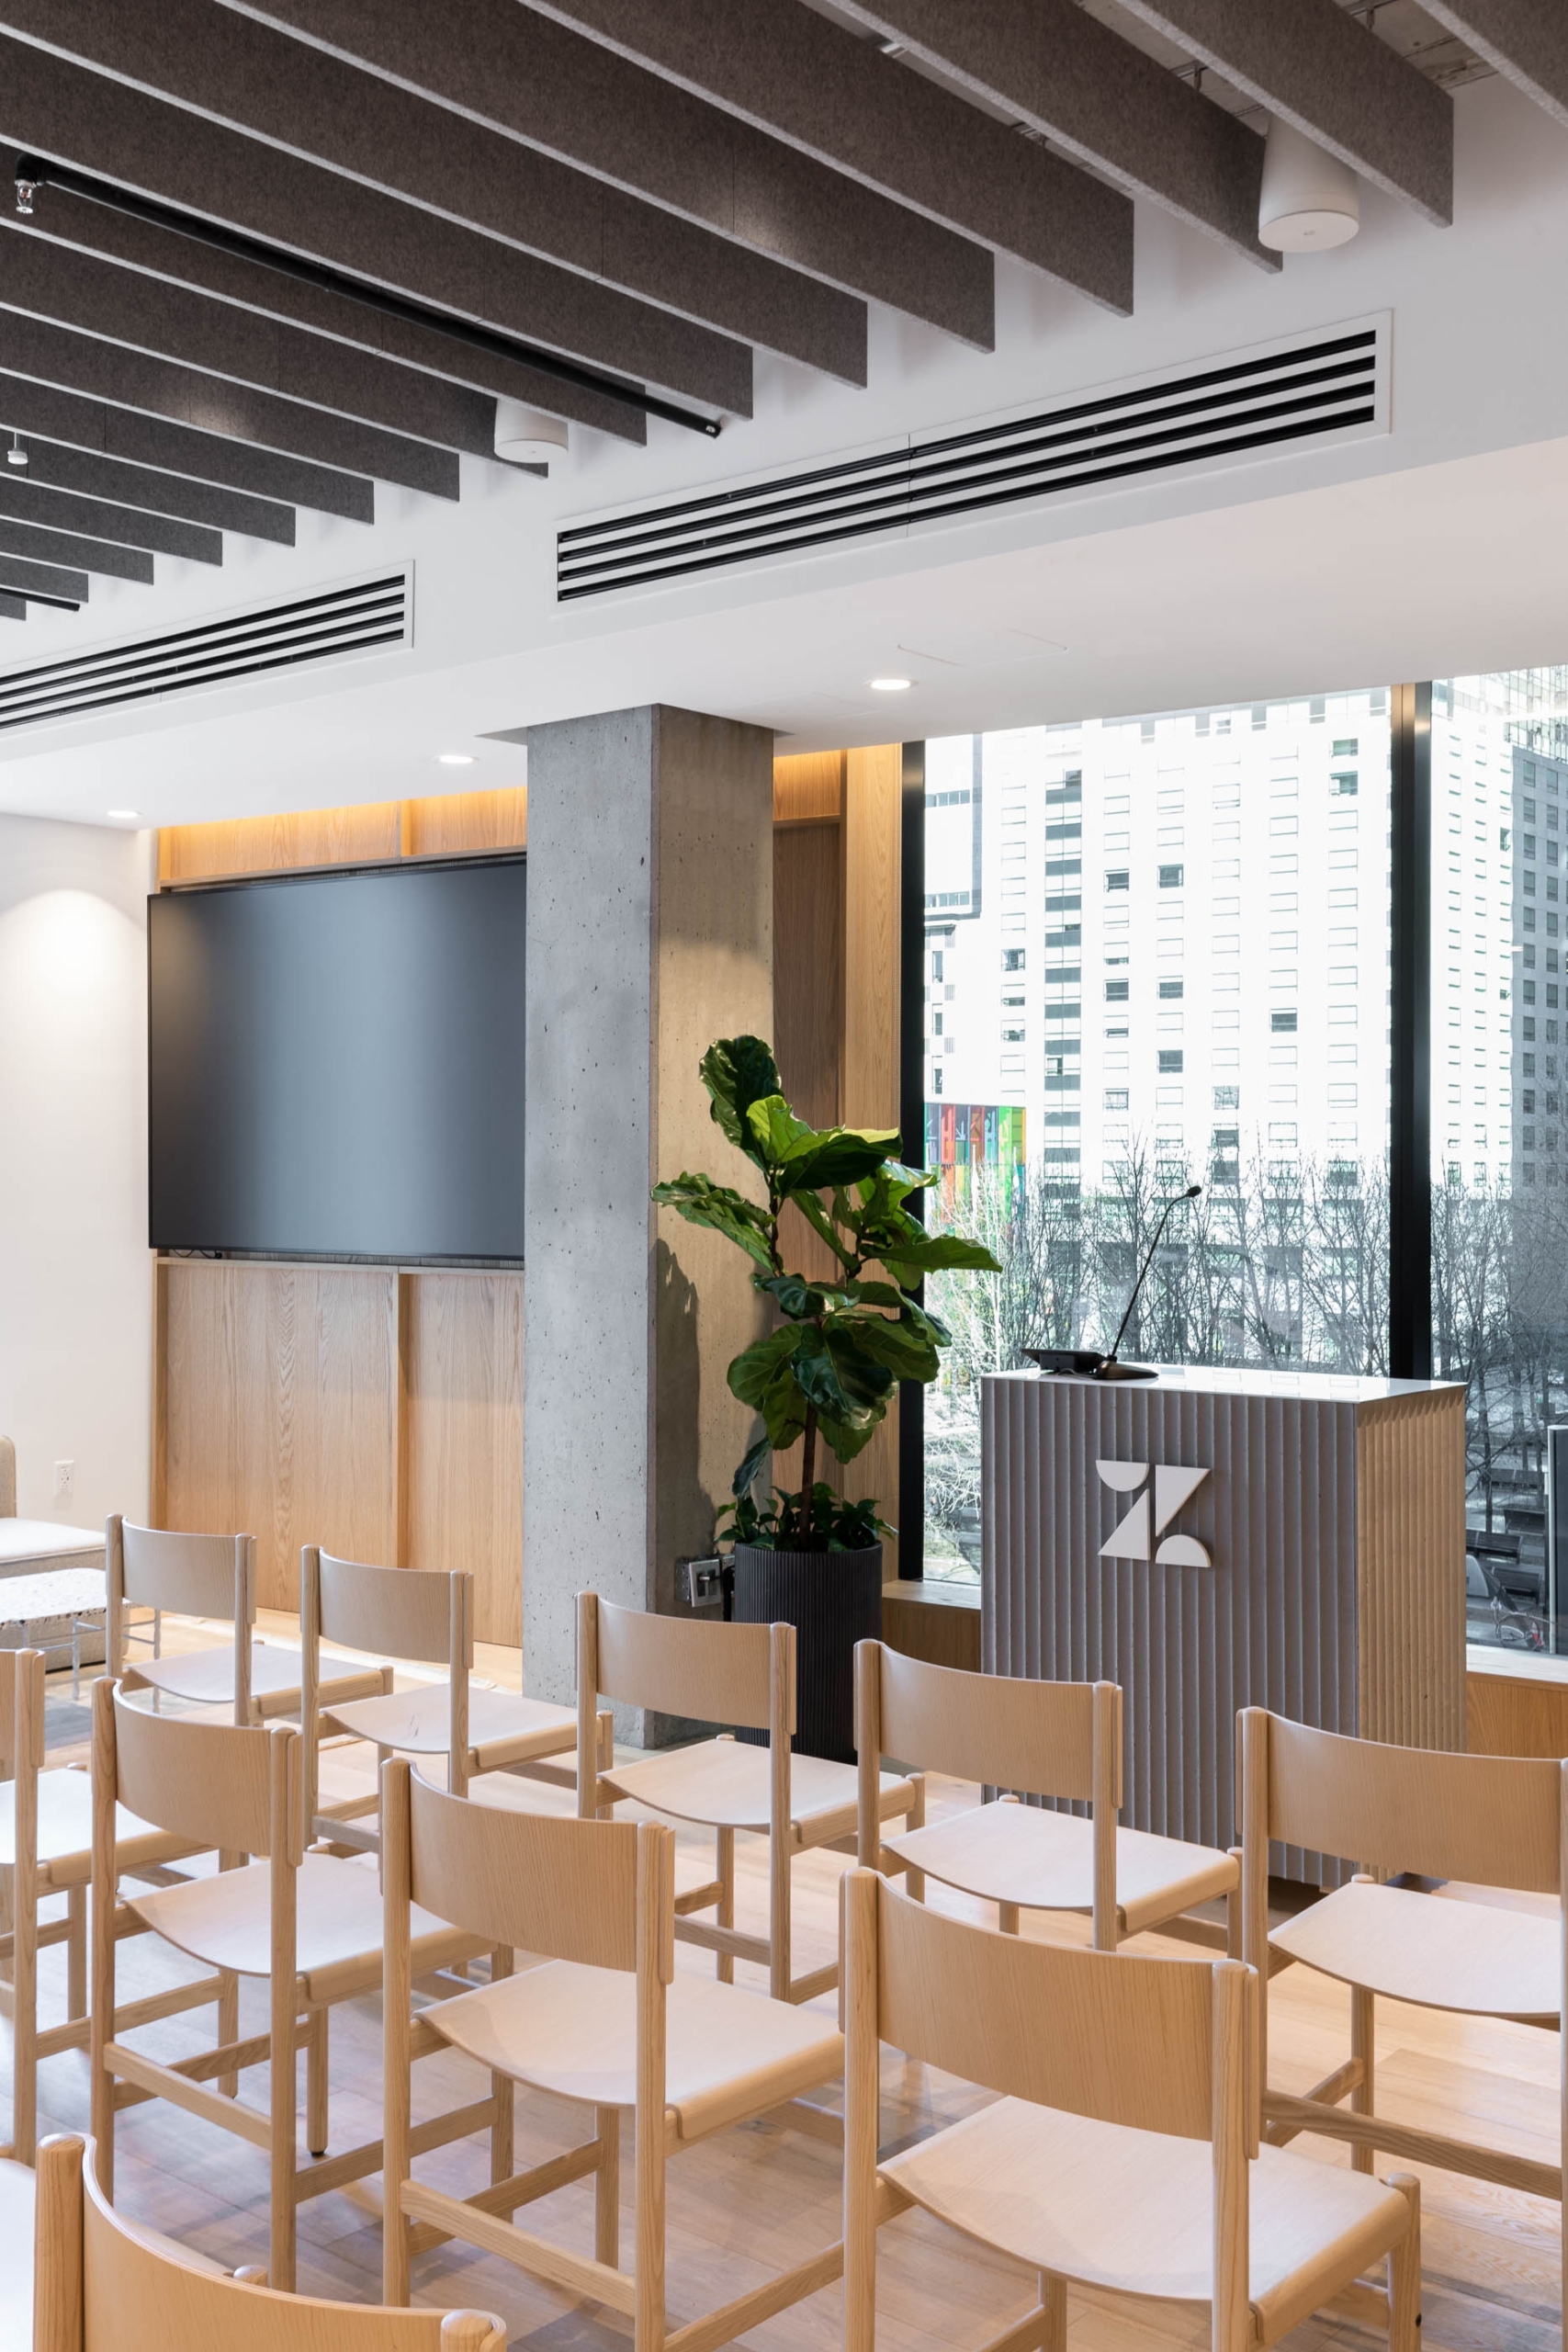 【Zendeskのオフィスデザイン】- カナダ, モントリオールの会議/ミーティングスペース【Zendeskのオフィスデザイン】- カナダ, モントリオールの会議/ミーティングスペース